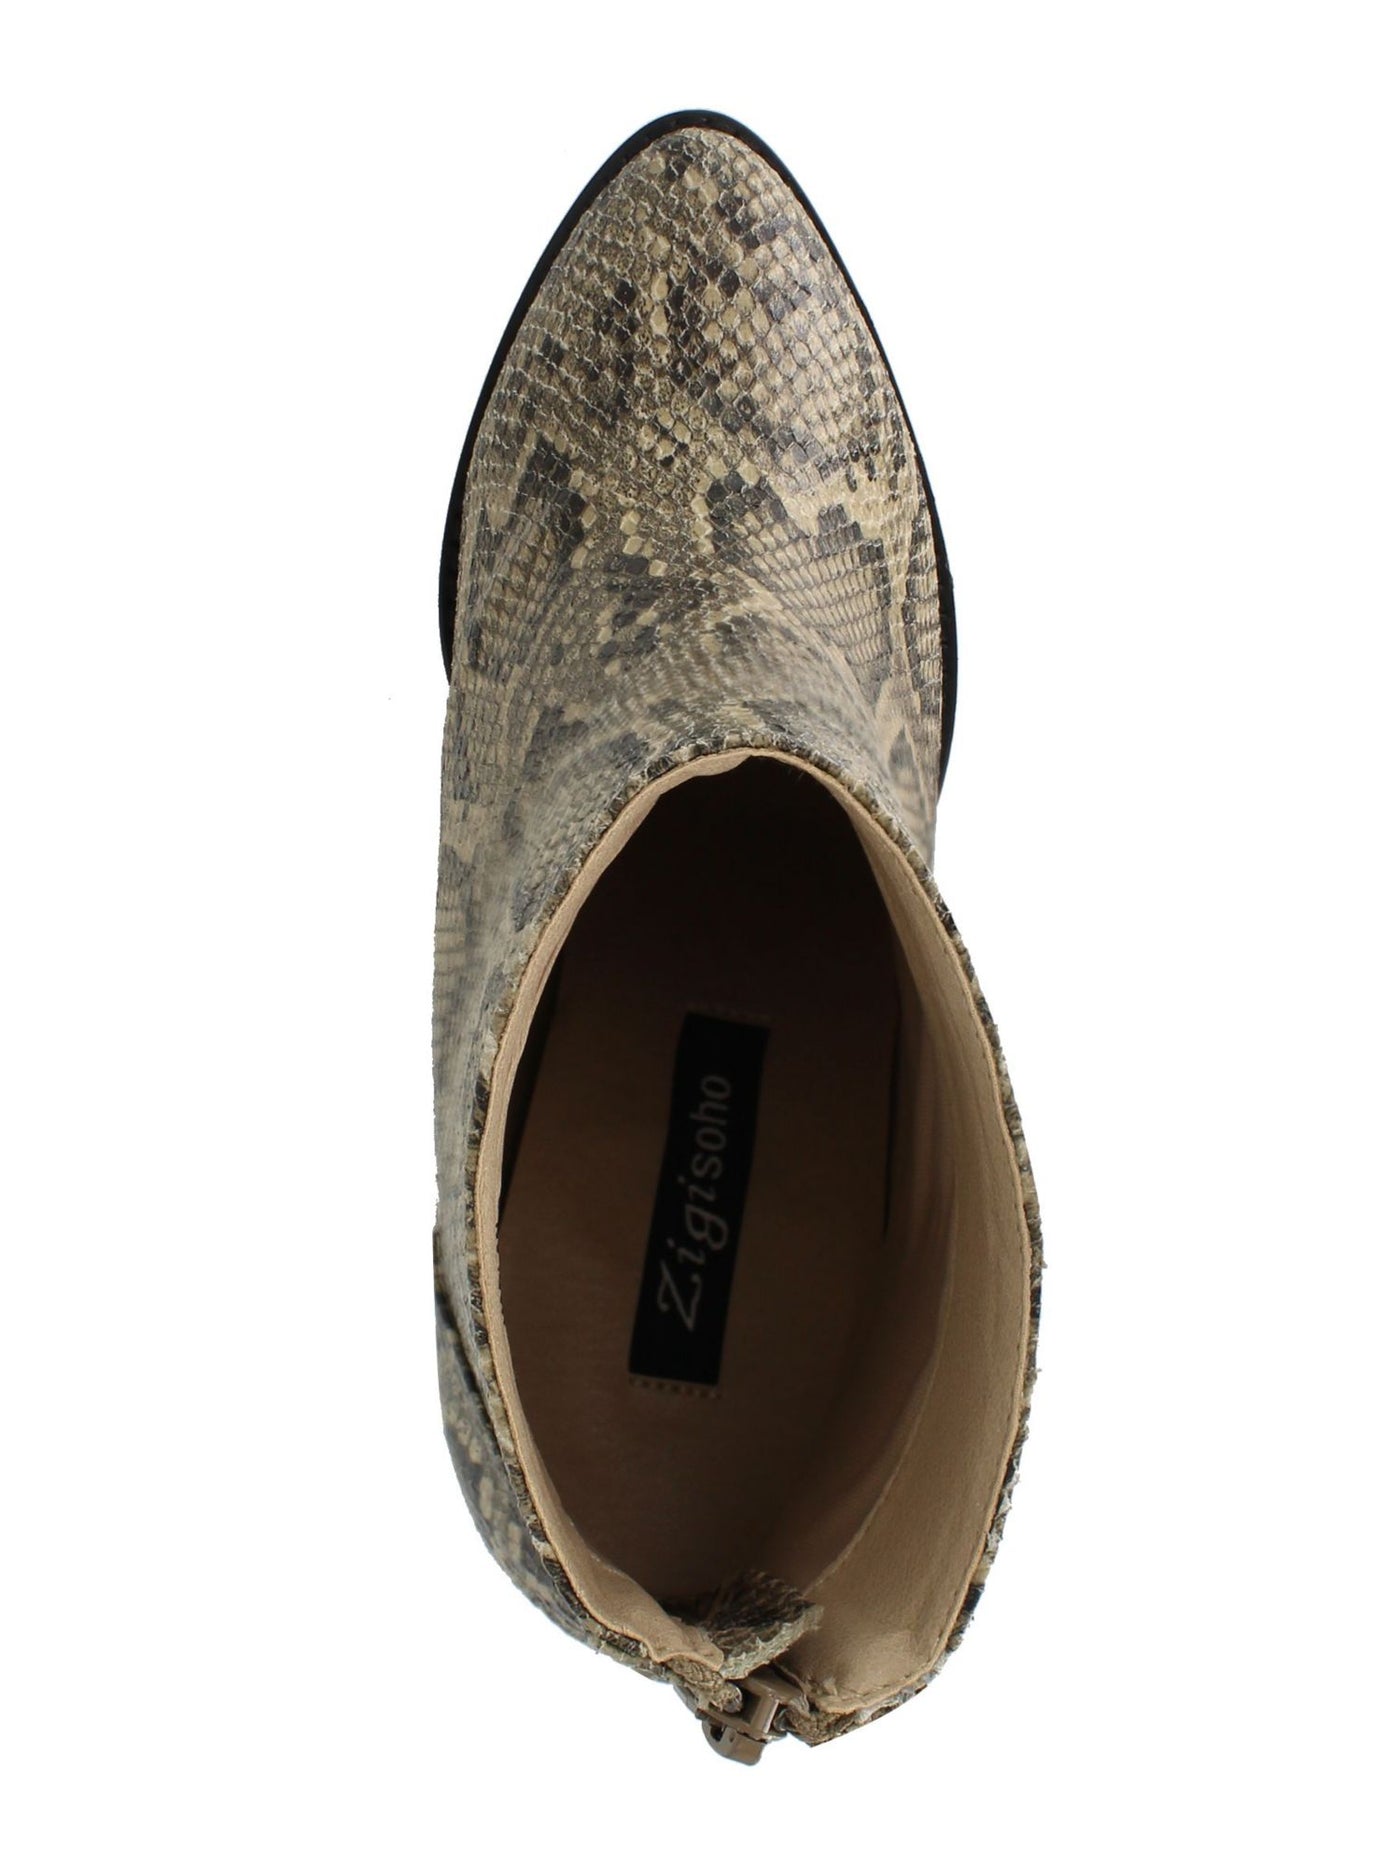 ZIGI SOHO Womens Gray Snake Skin Harlan Almond Toe Block Heel Zip-Up Boots Shoes 8